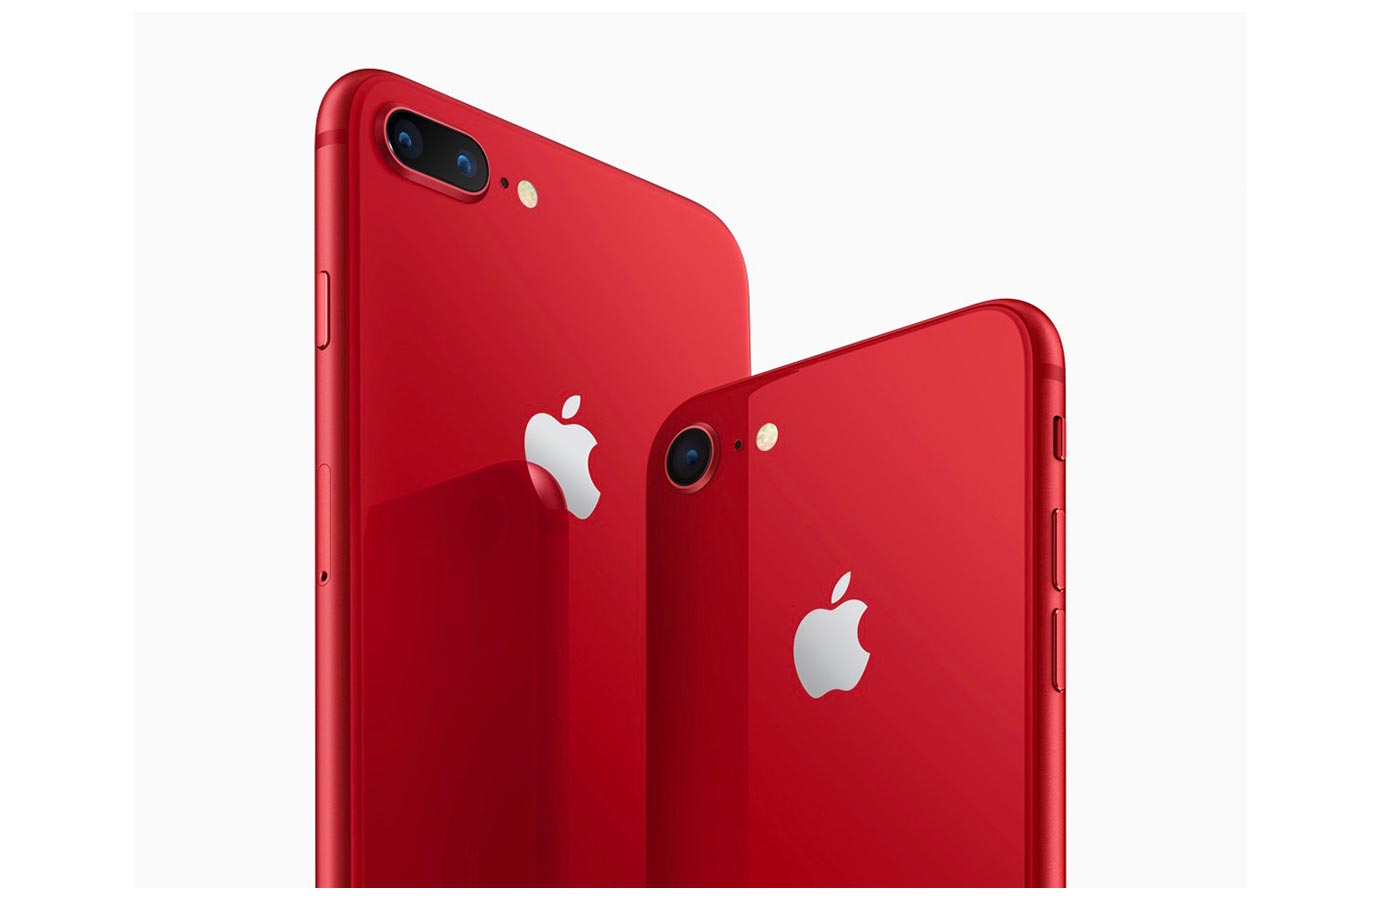 NTTドコモ、「iPhone 8 / iPhone 8 Plus (PRODUCT)RED Special Edition」を4月14日から販売開始、予約は4月11日9時から